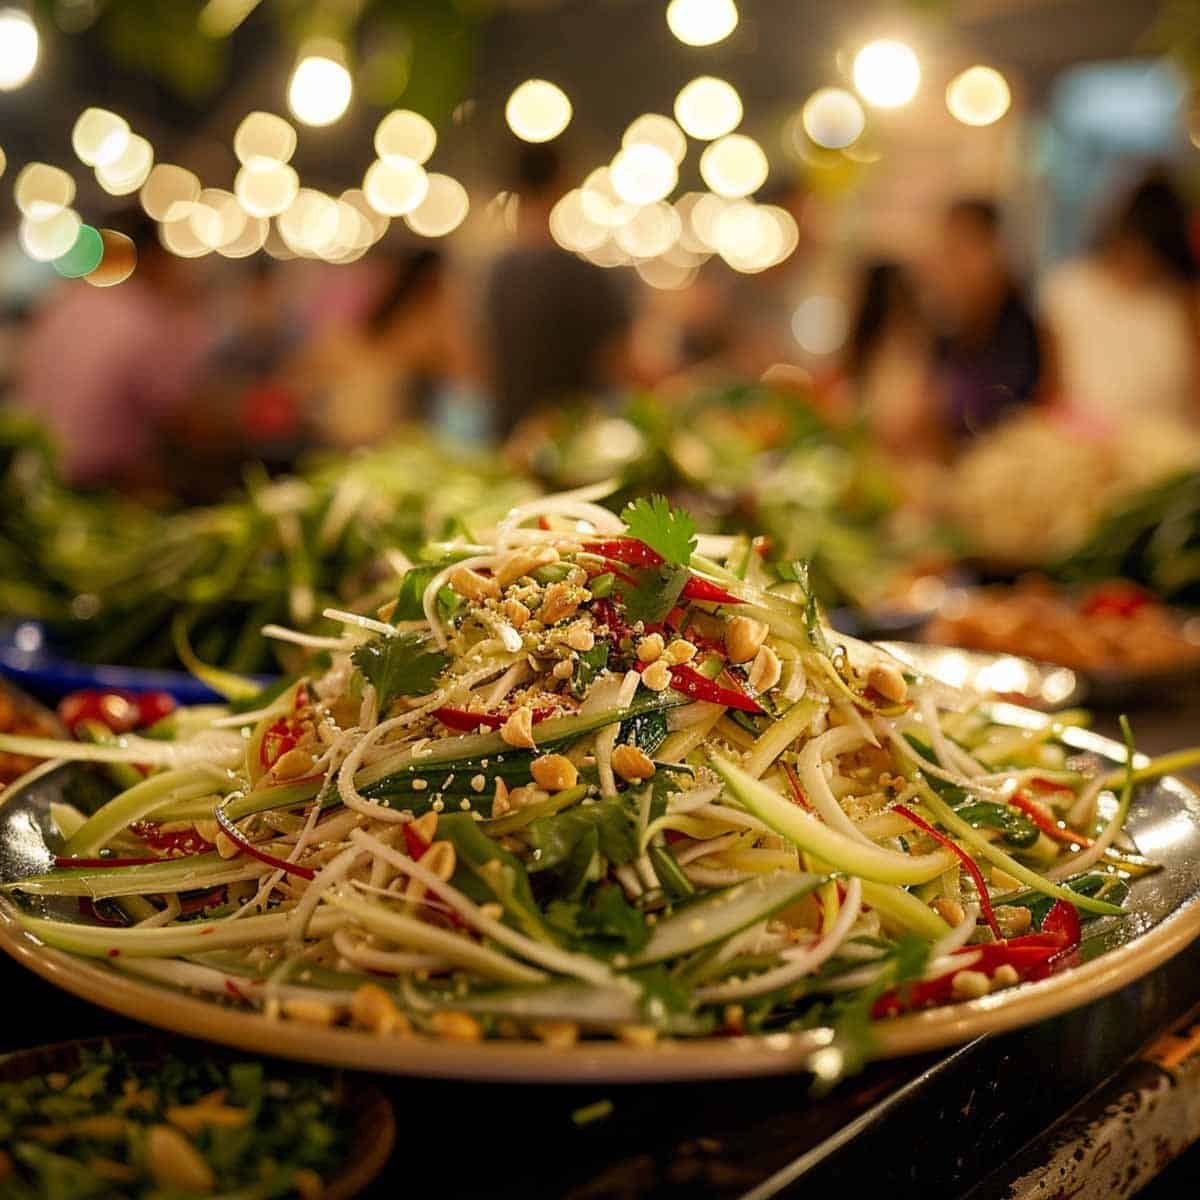 A Plate of Thai Green Papaya Salad also known as Som Tum.